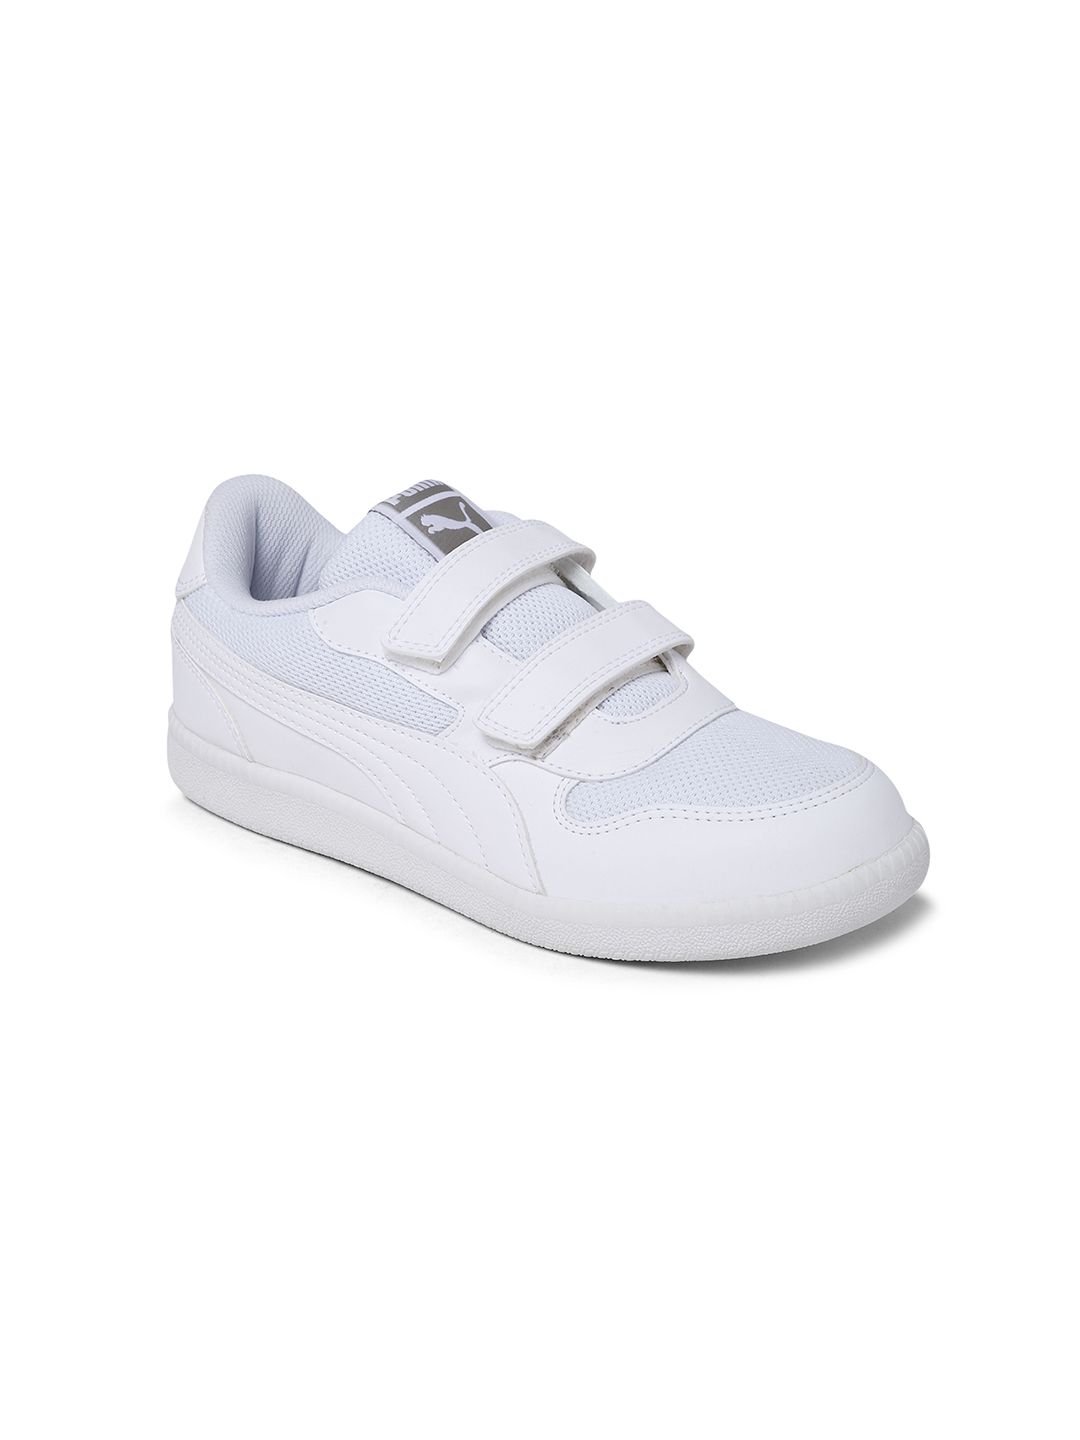 Puma Unisex White Sneakers Price in India